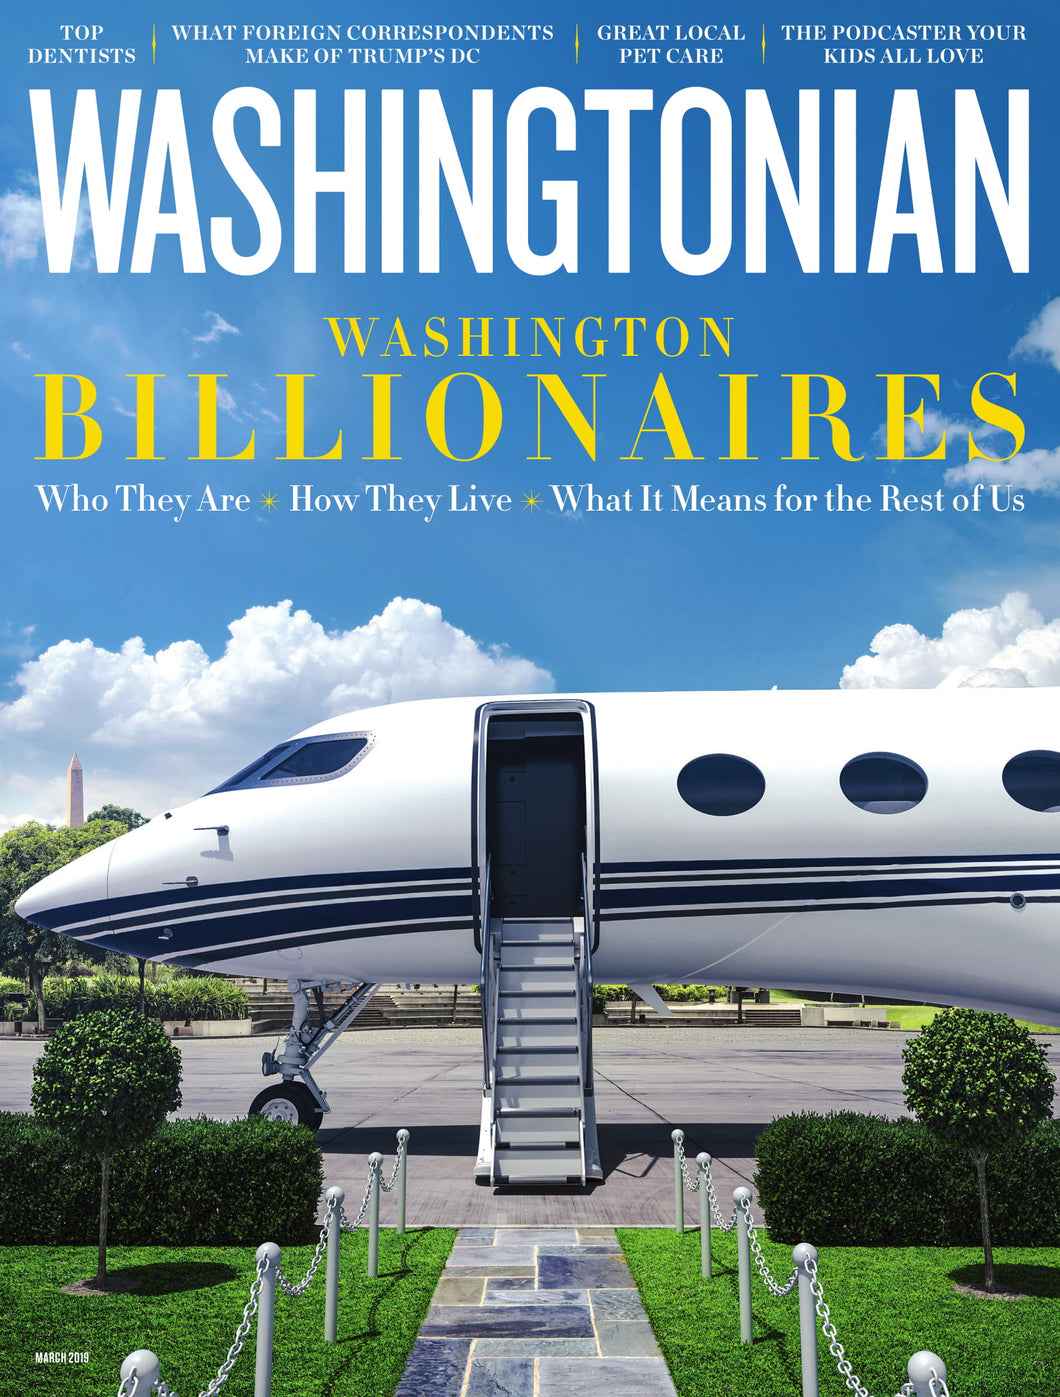 Washingtonian: March 2019 - Washington Billionaires